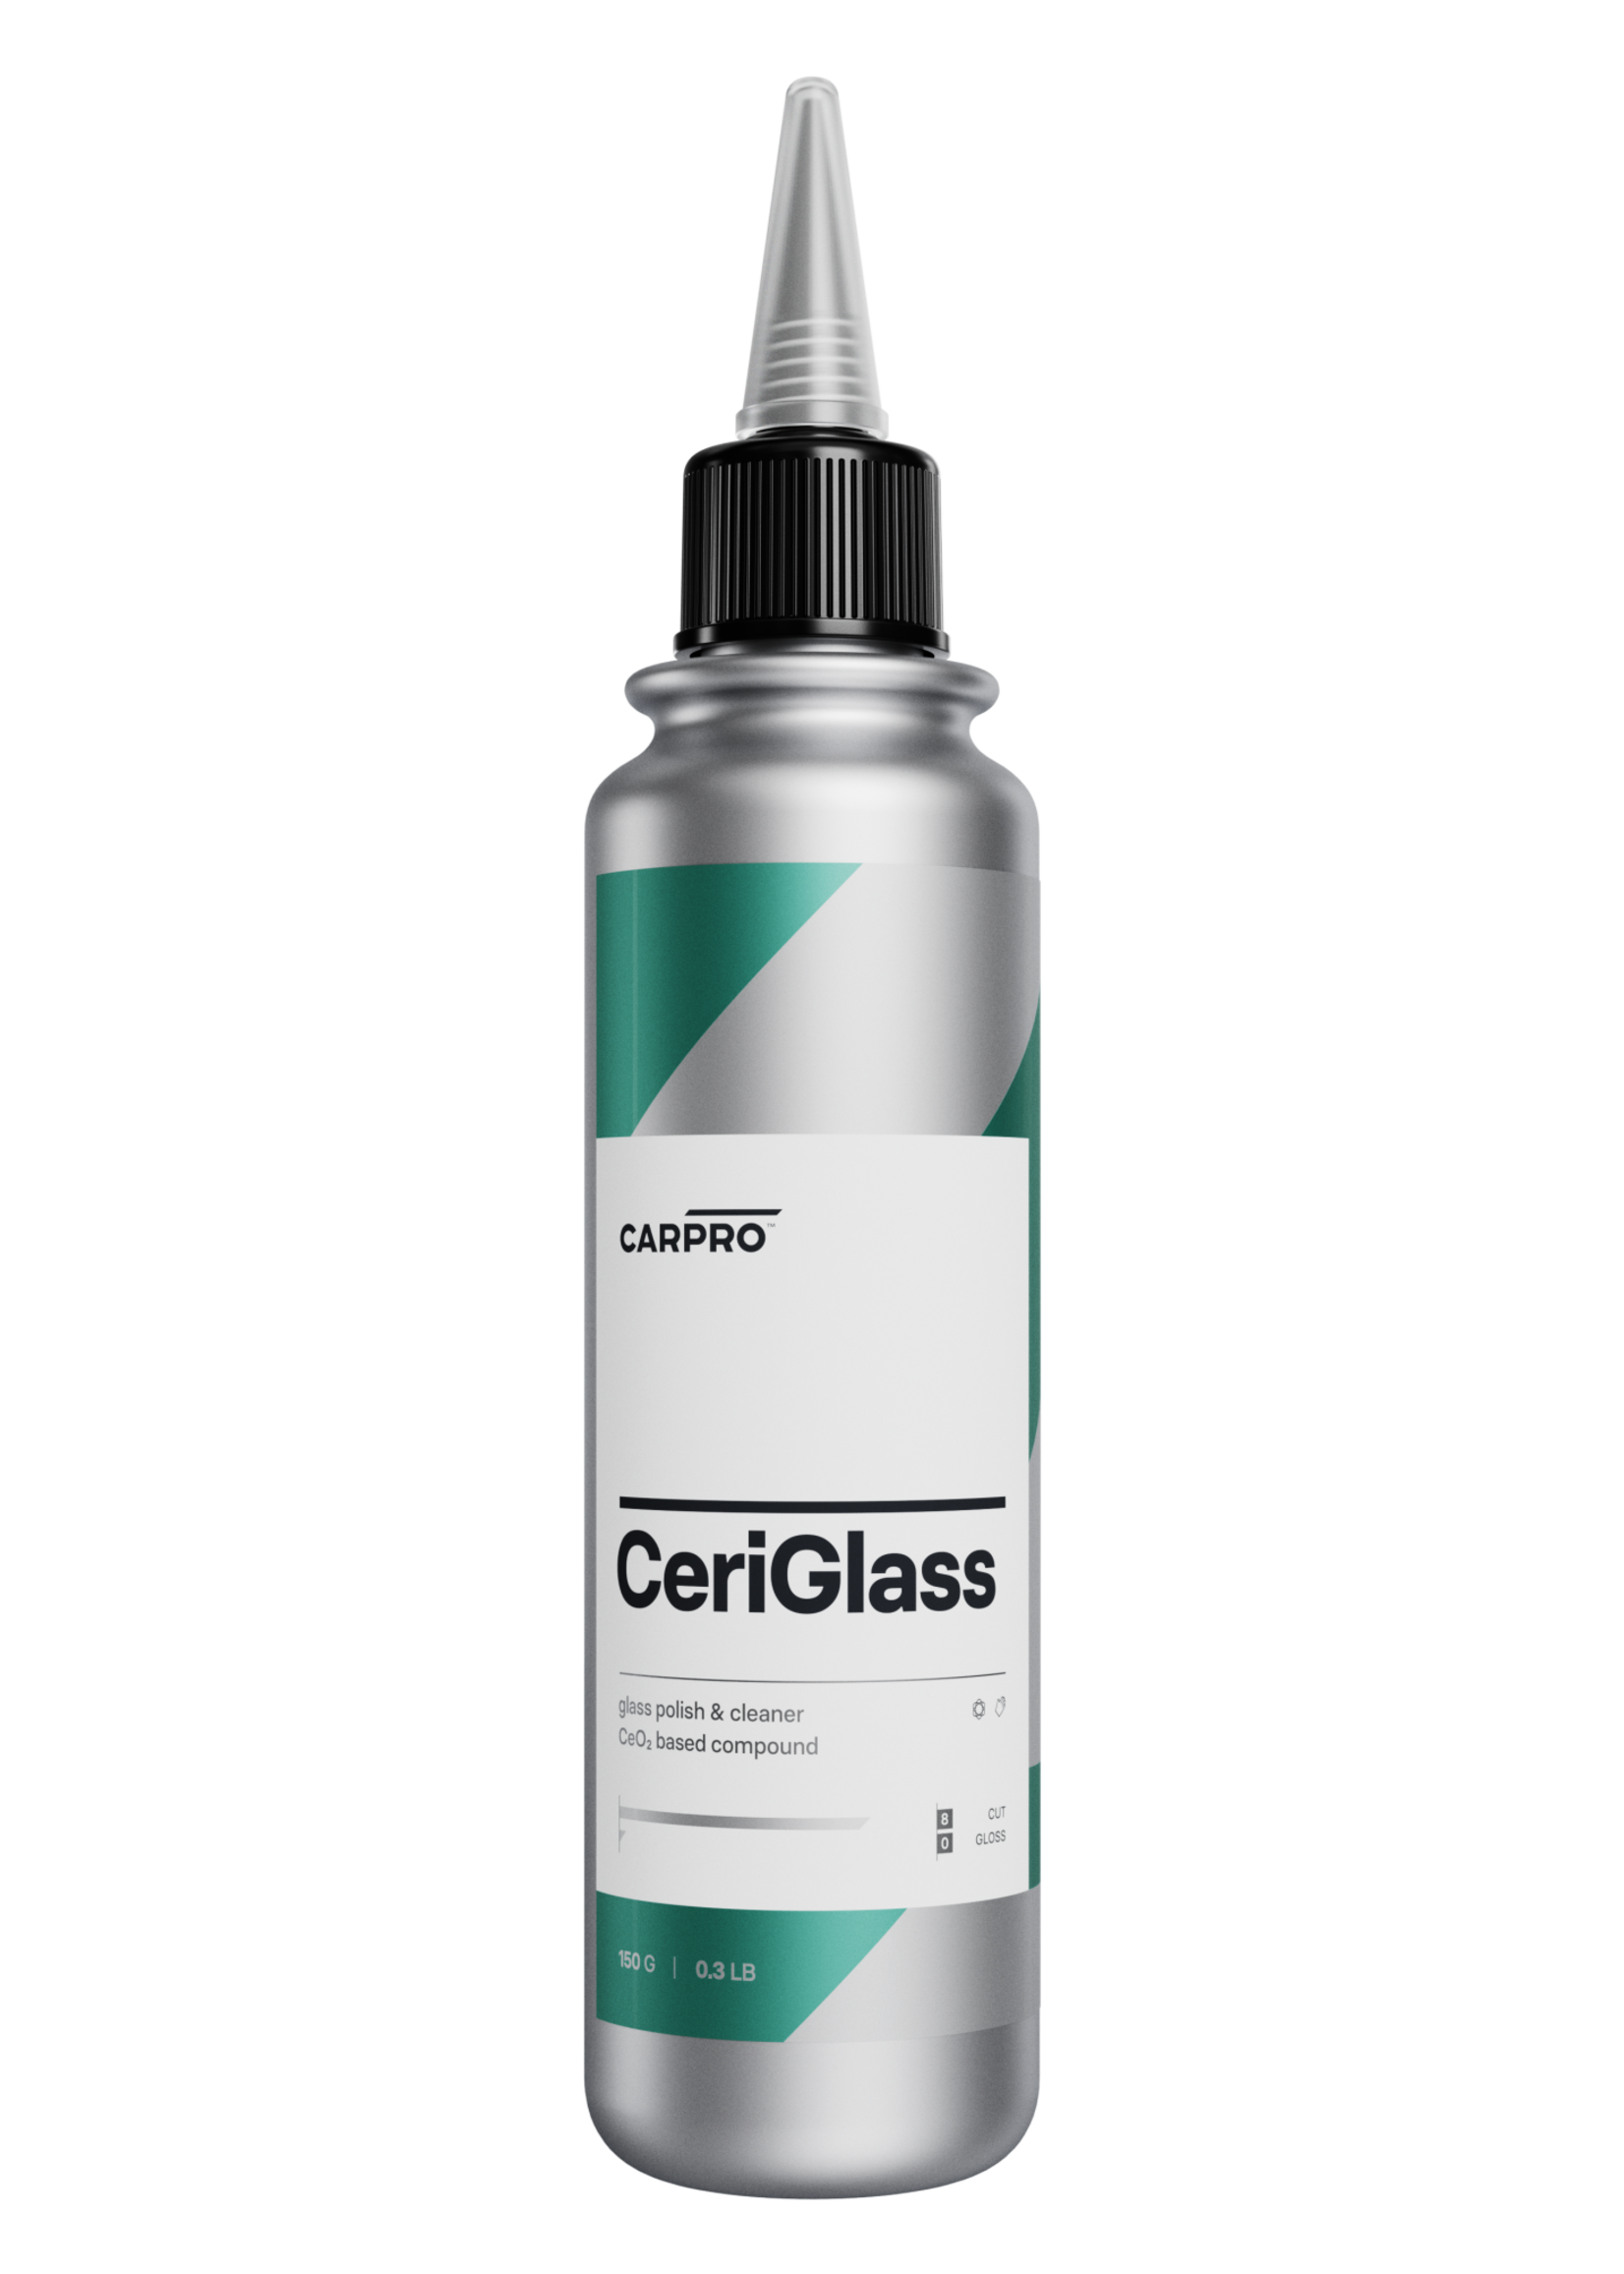 CARPRO CeriGlass Glass Polish & Cleaner